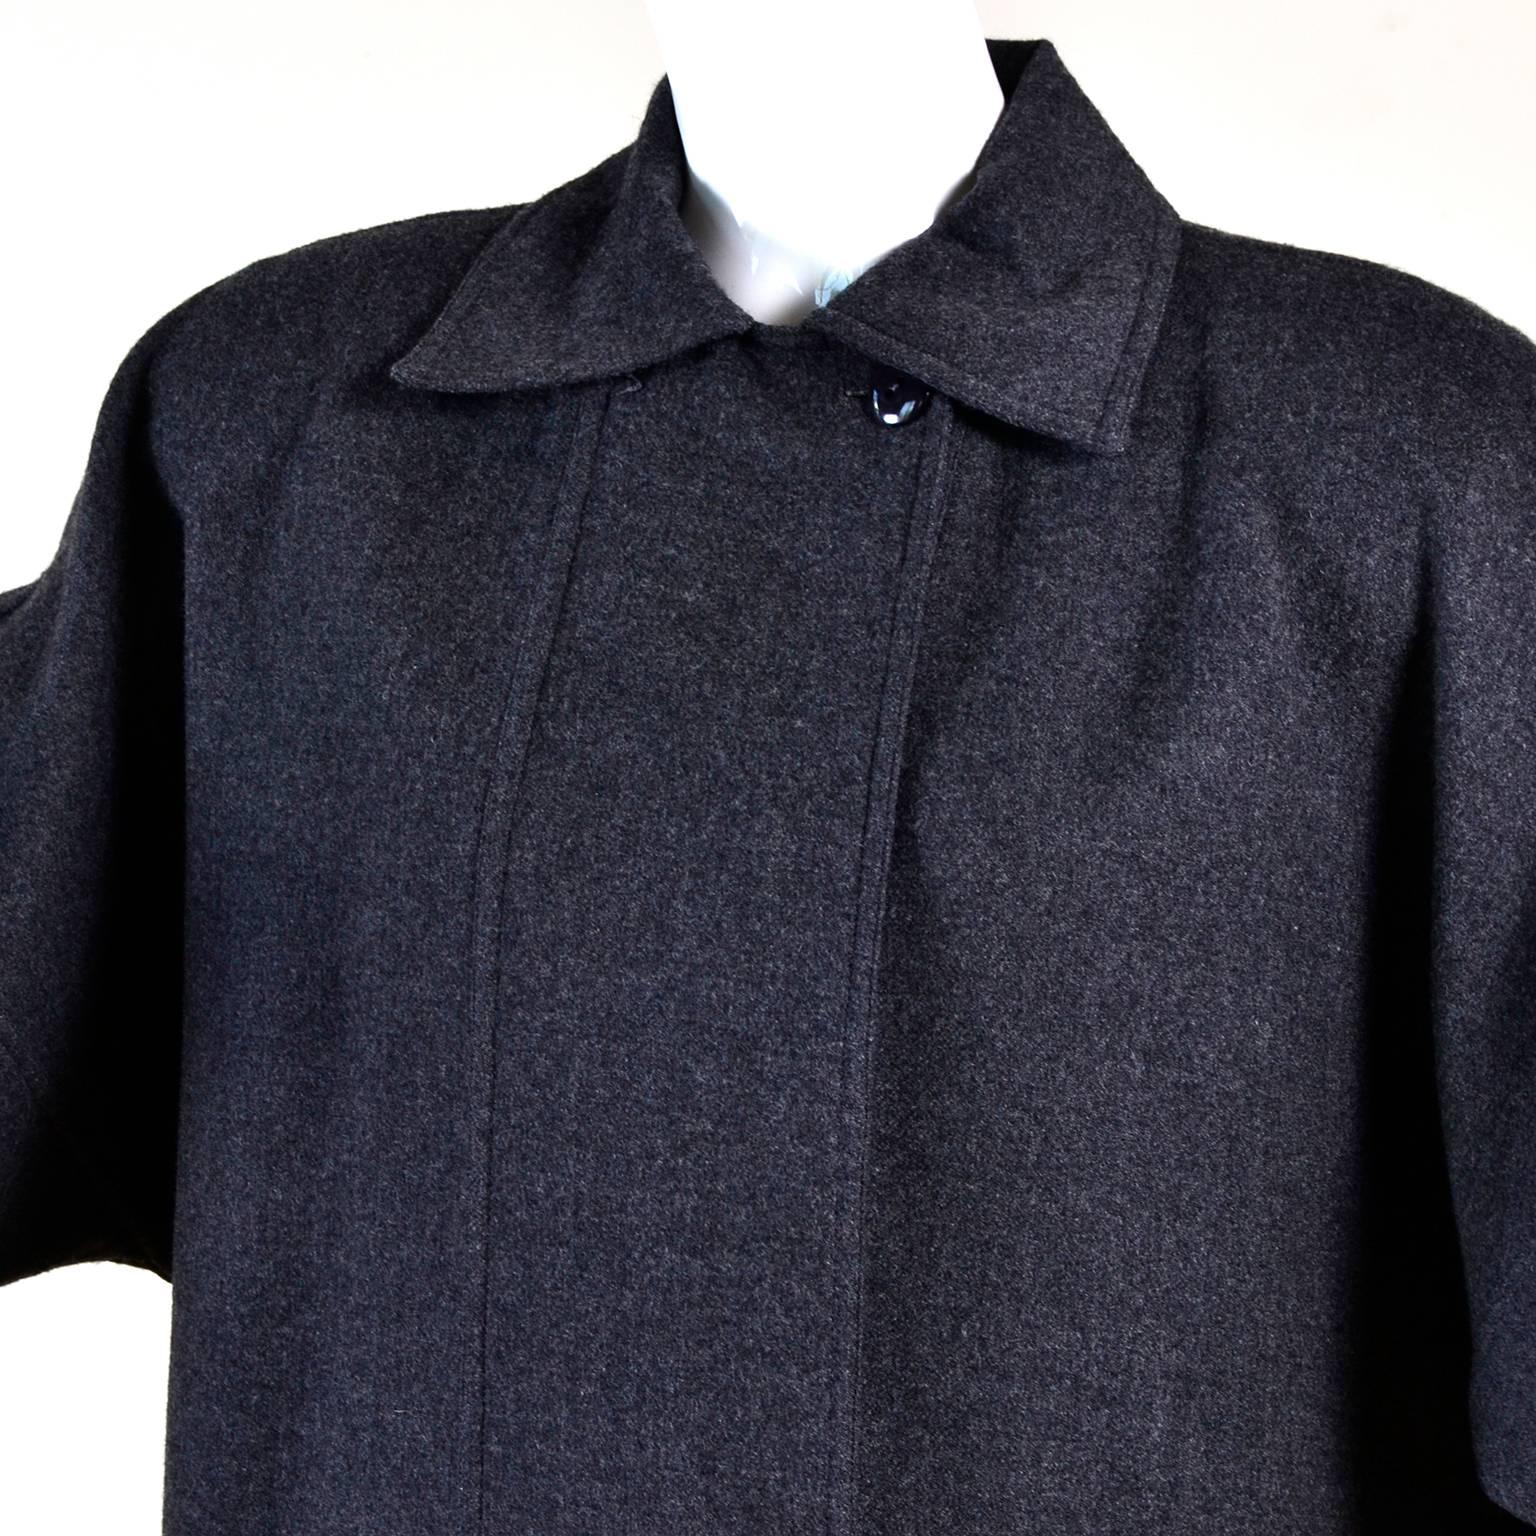 Vintage Salvatore Ferragamo Coat 1980s Oversized Gray Wool Jacket W Pockets For Sale 1